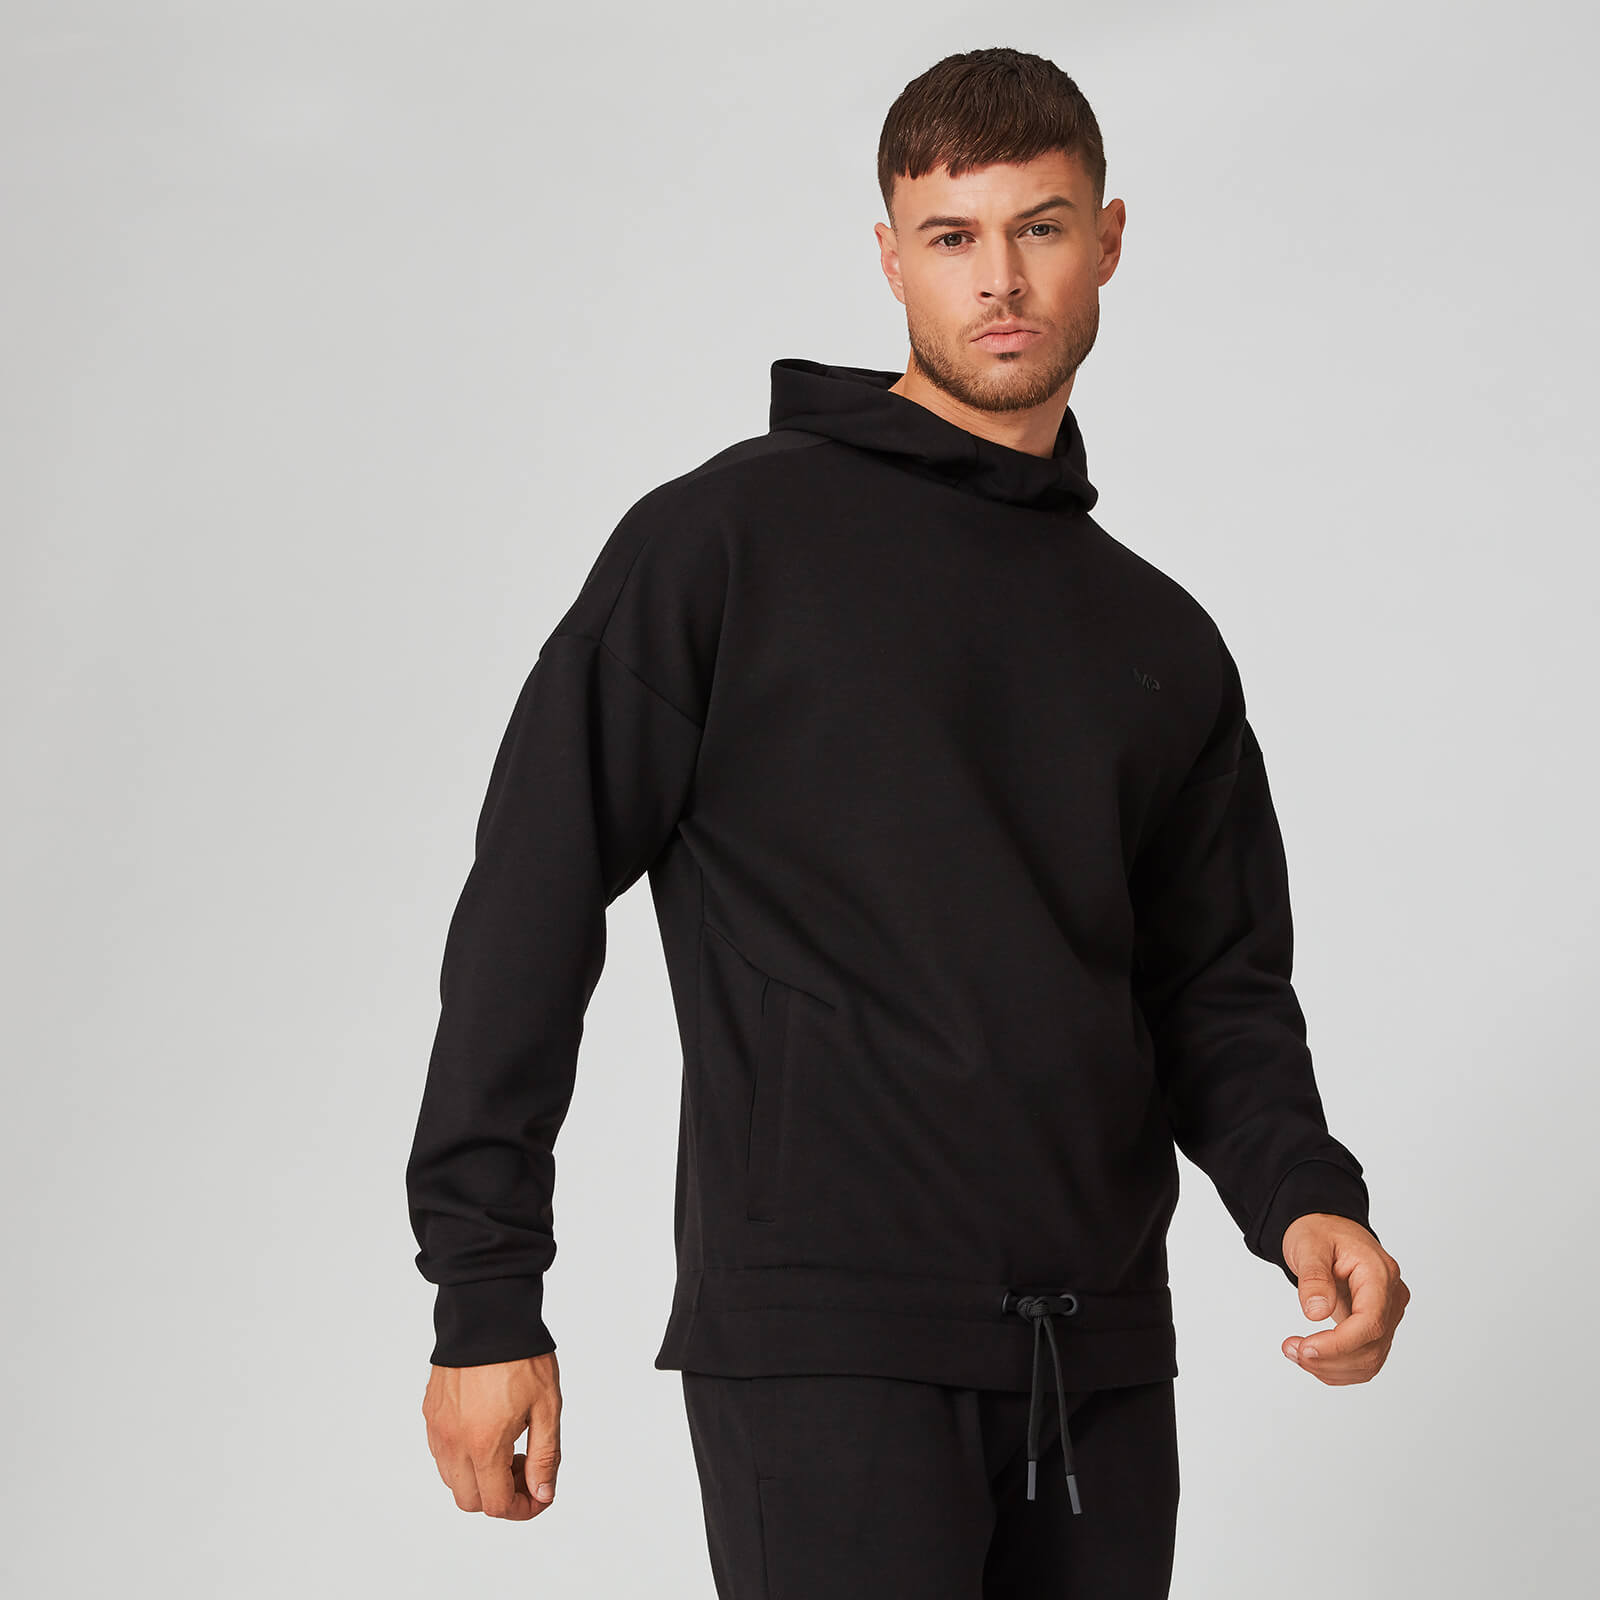 Form Pro Pullover majica s kapuljačom - Crna - S